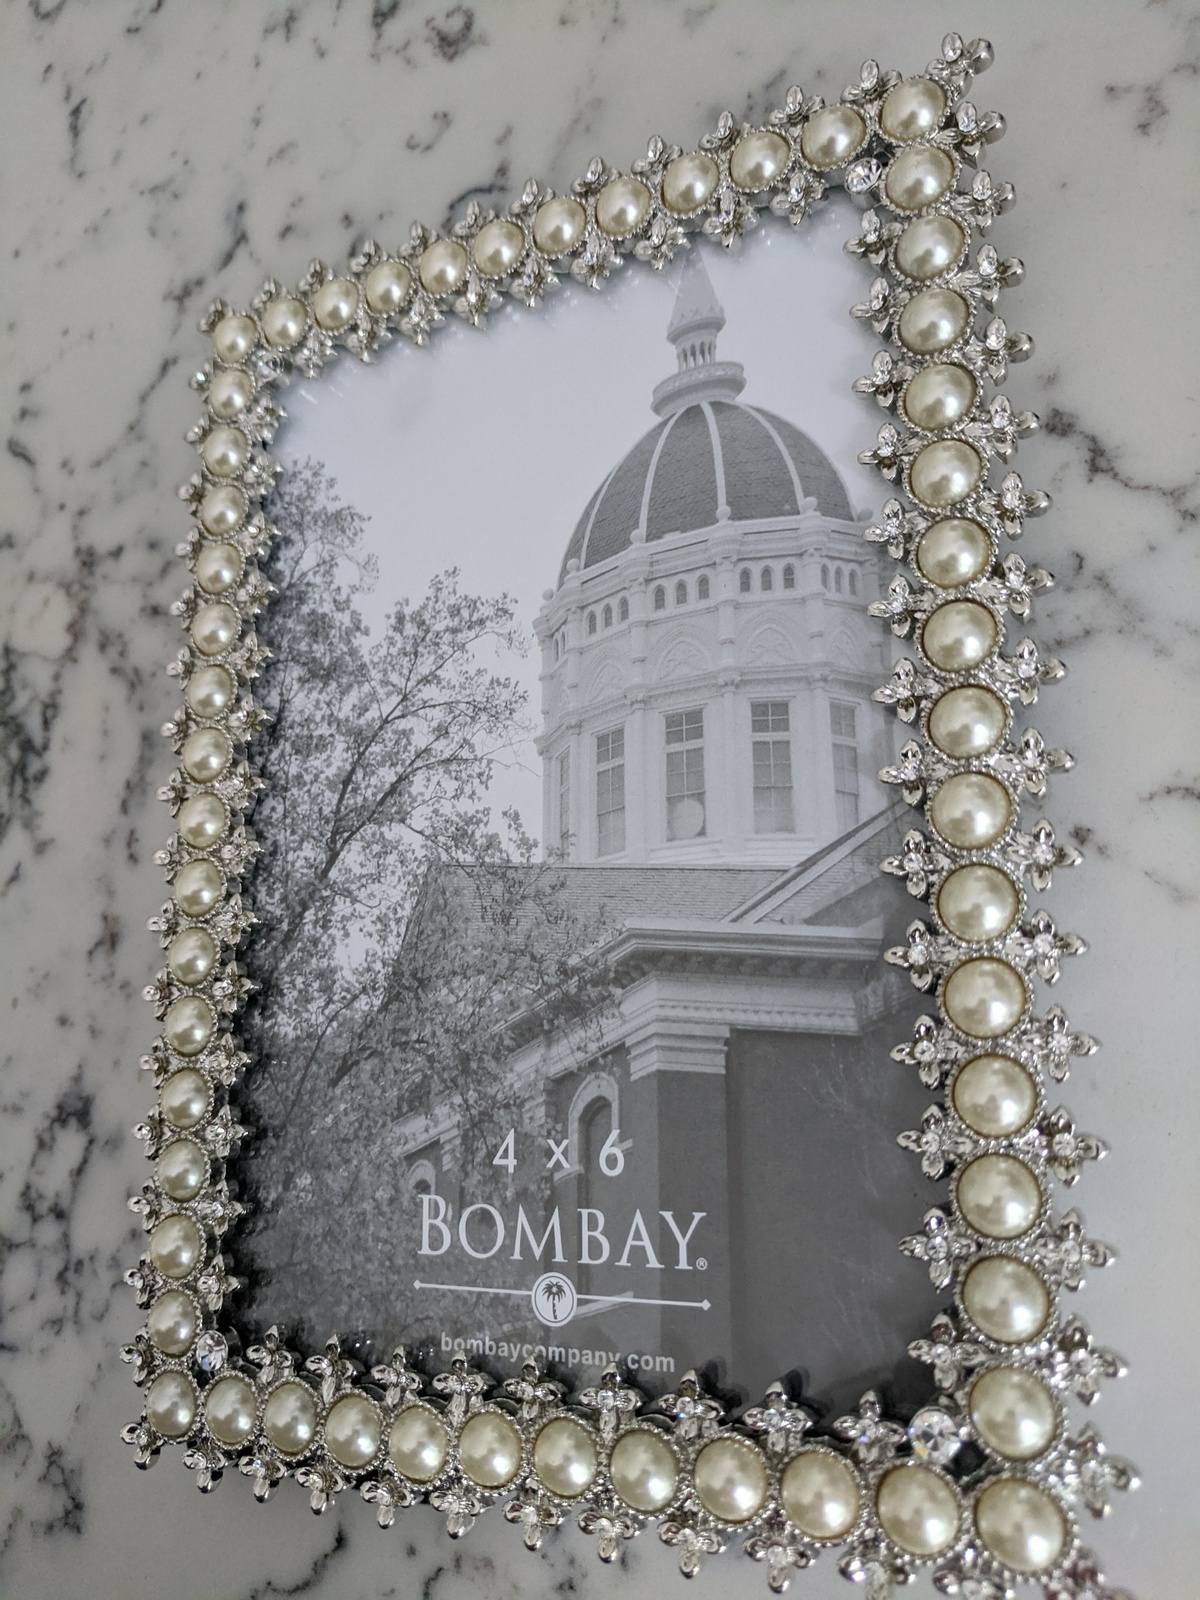 Bombay Jeweled Pearl Heavy Metal 4x6 Photo Frame - $50.00